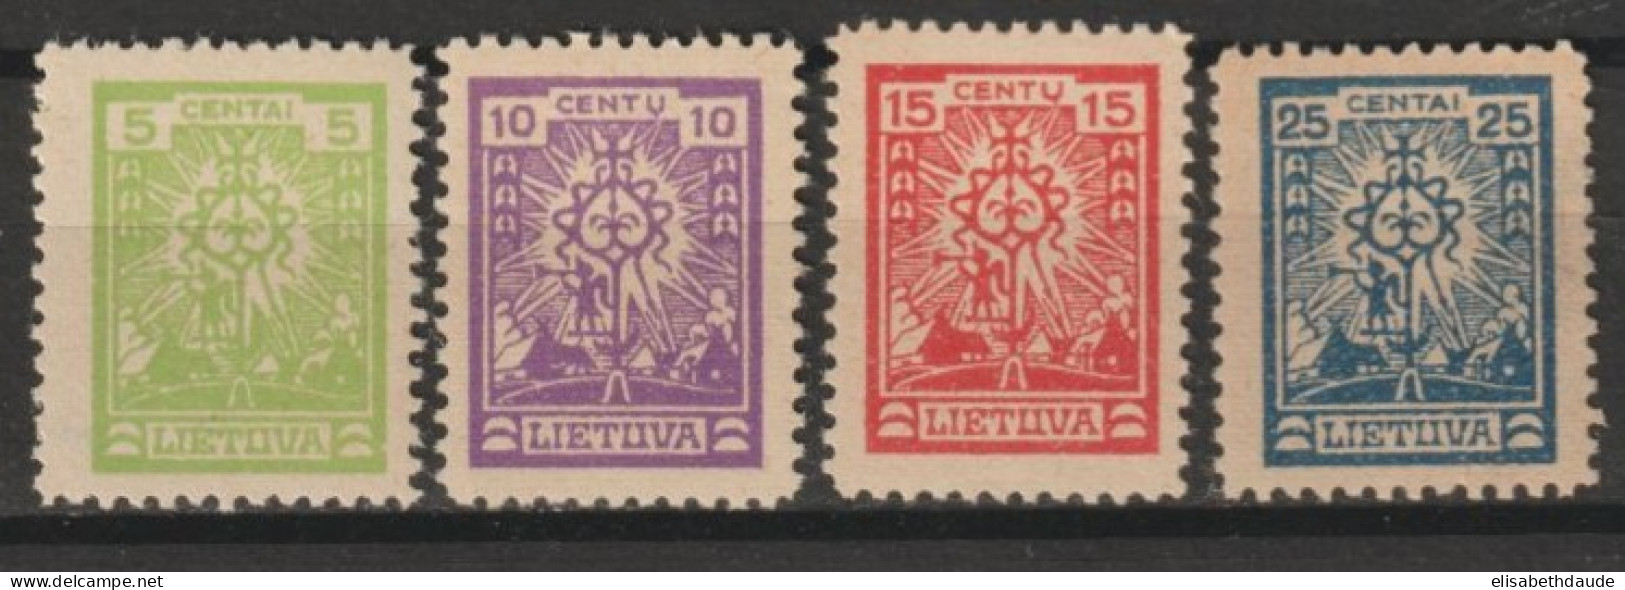 1923 - LITUANIE - SERIE COMPLETE  N°185/187 * MLH SANS FILIGRANE - COTE = 30 EUR. - Litouwen